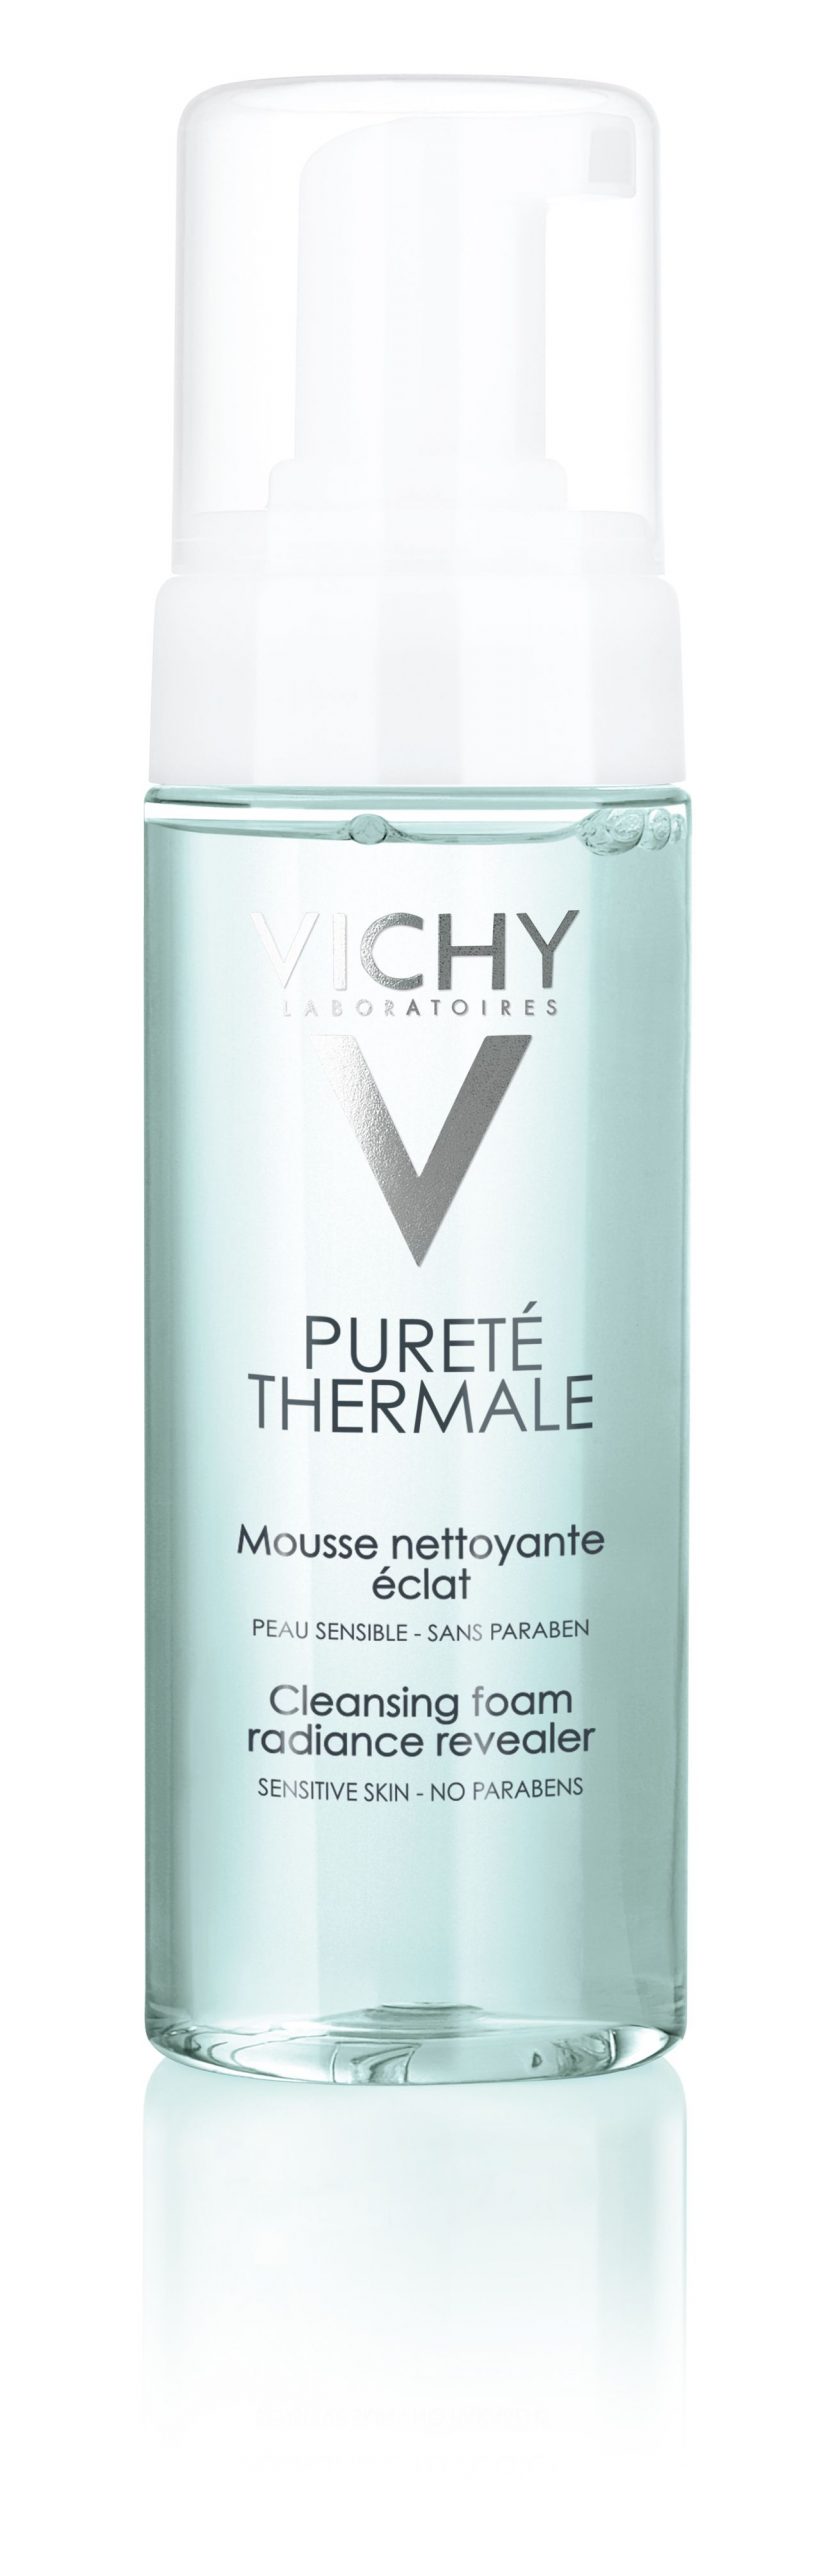 Vichy Pureté thermale Pěnová voda 150 ml Vichy